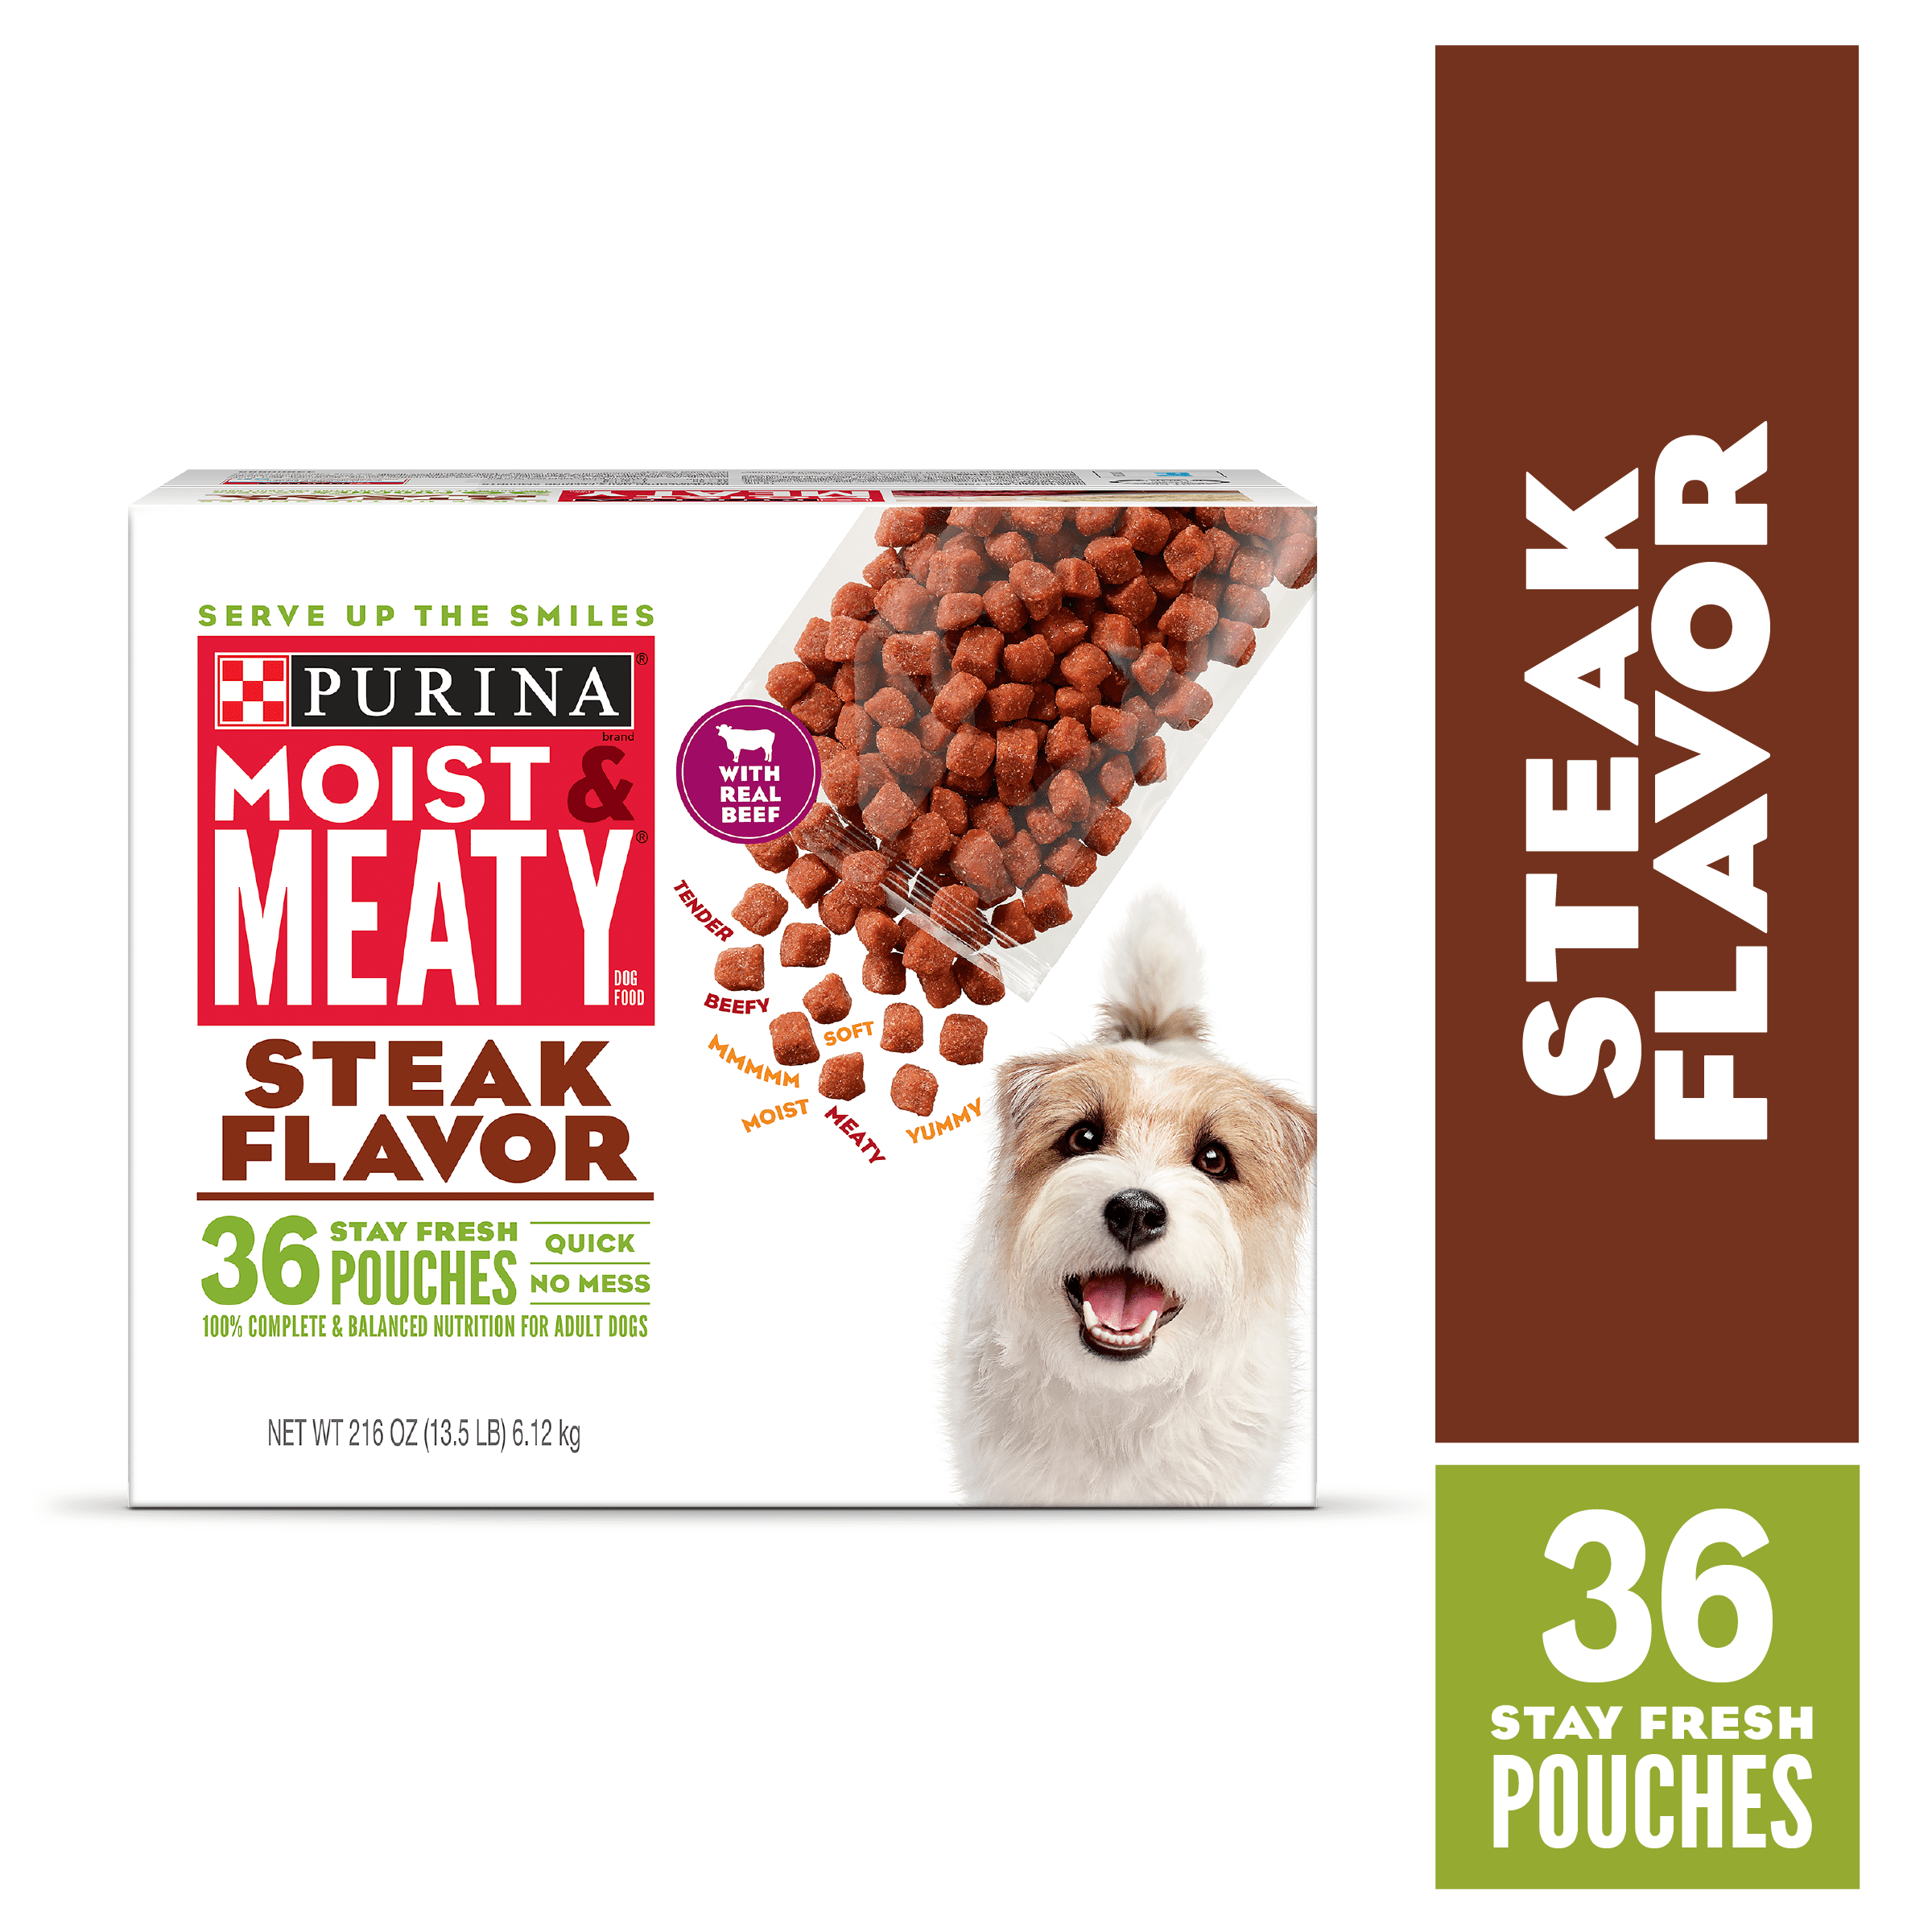 moist dog food packets